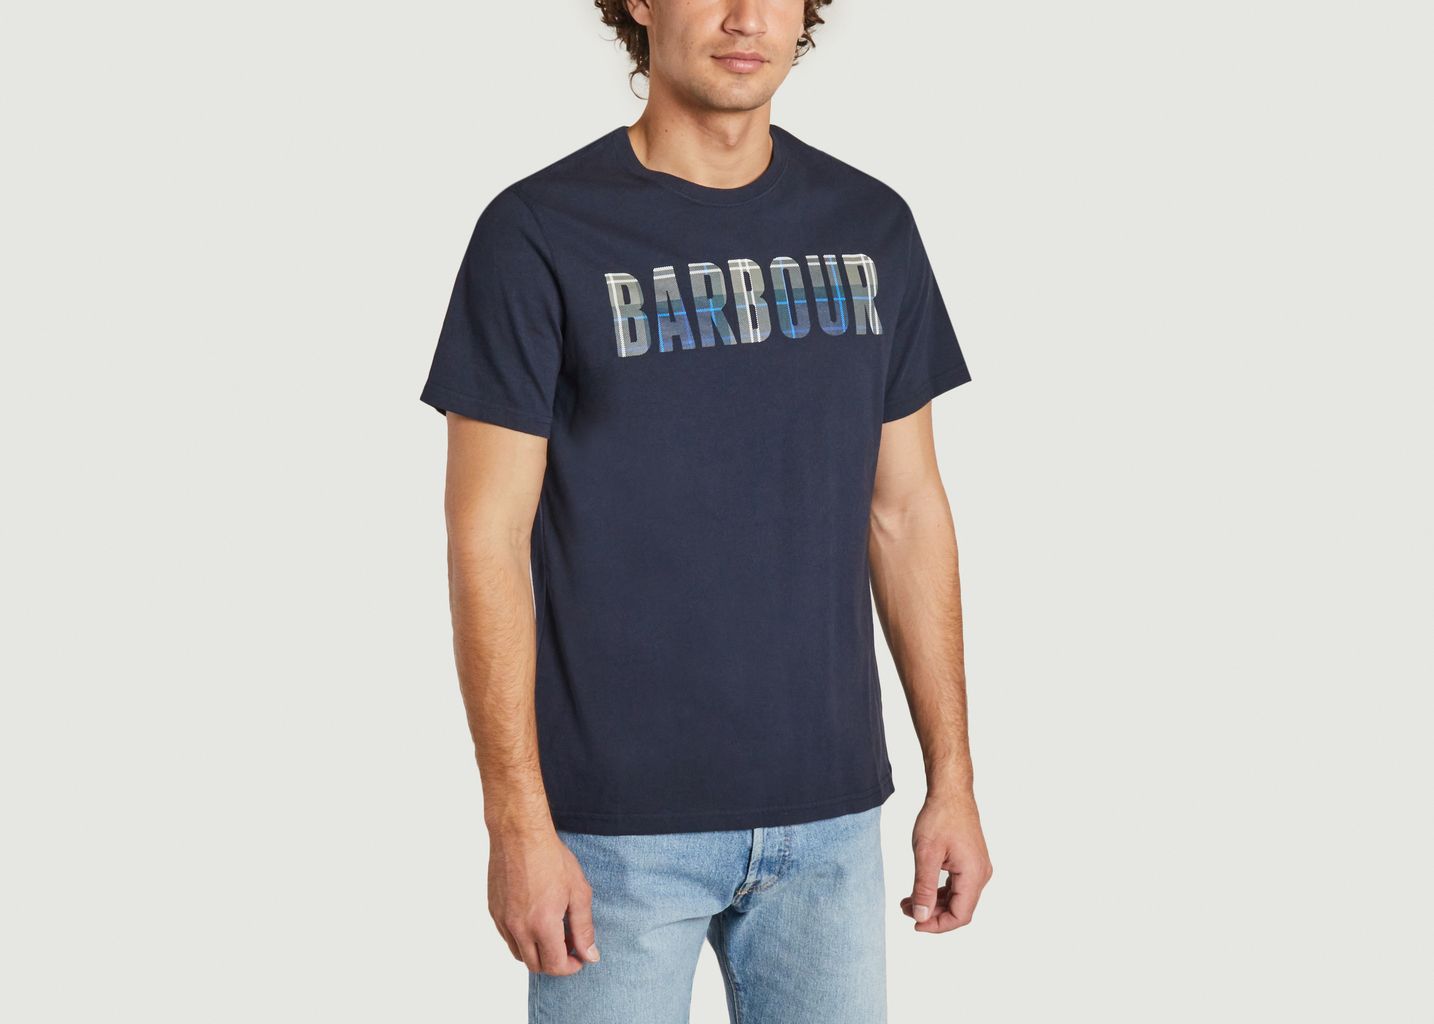 Tee-shirt Thurso - Barbour